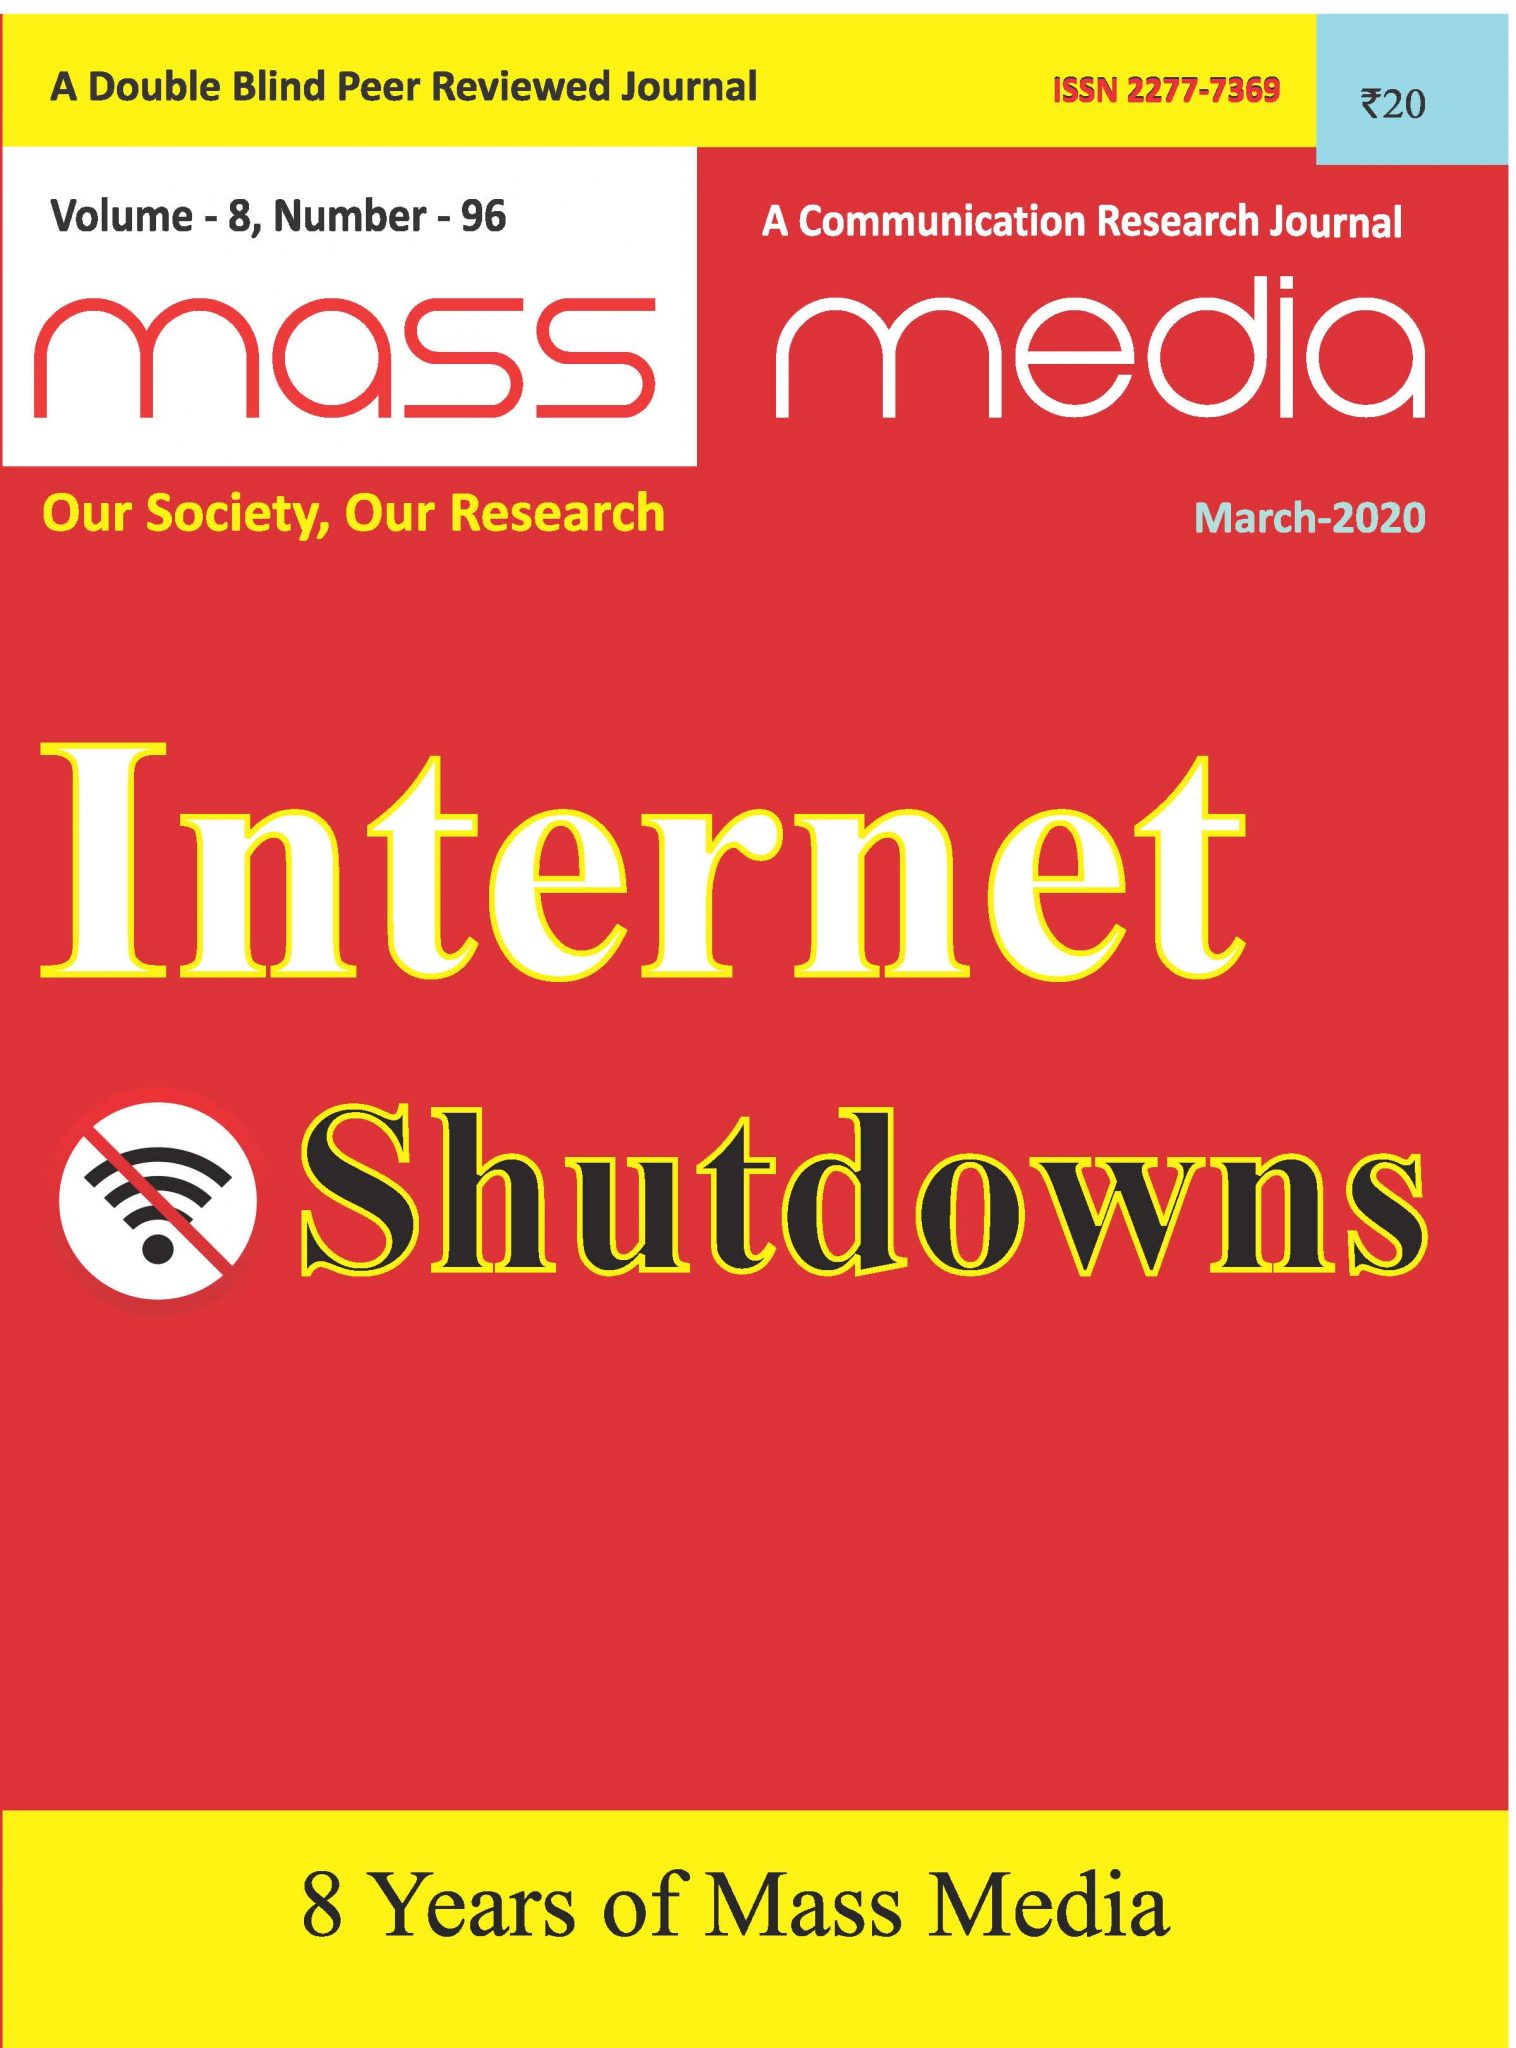 Mass Media (March 2020)